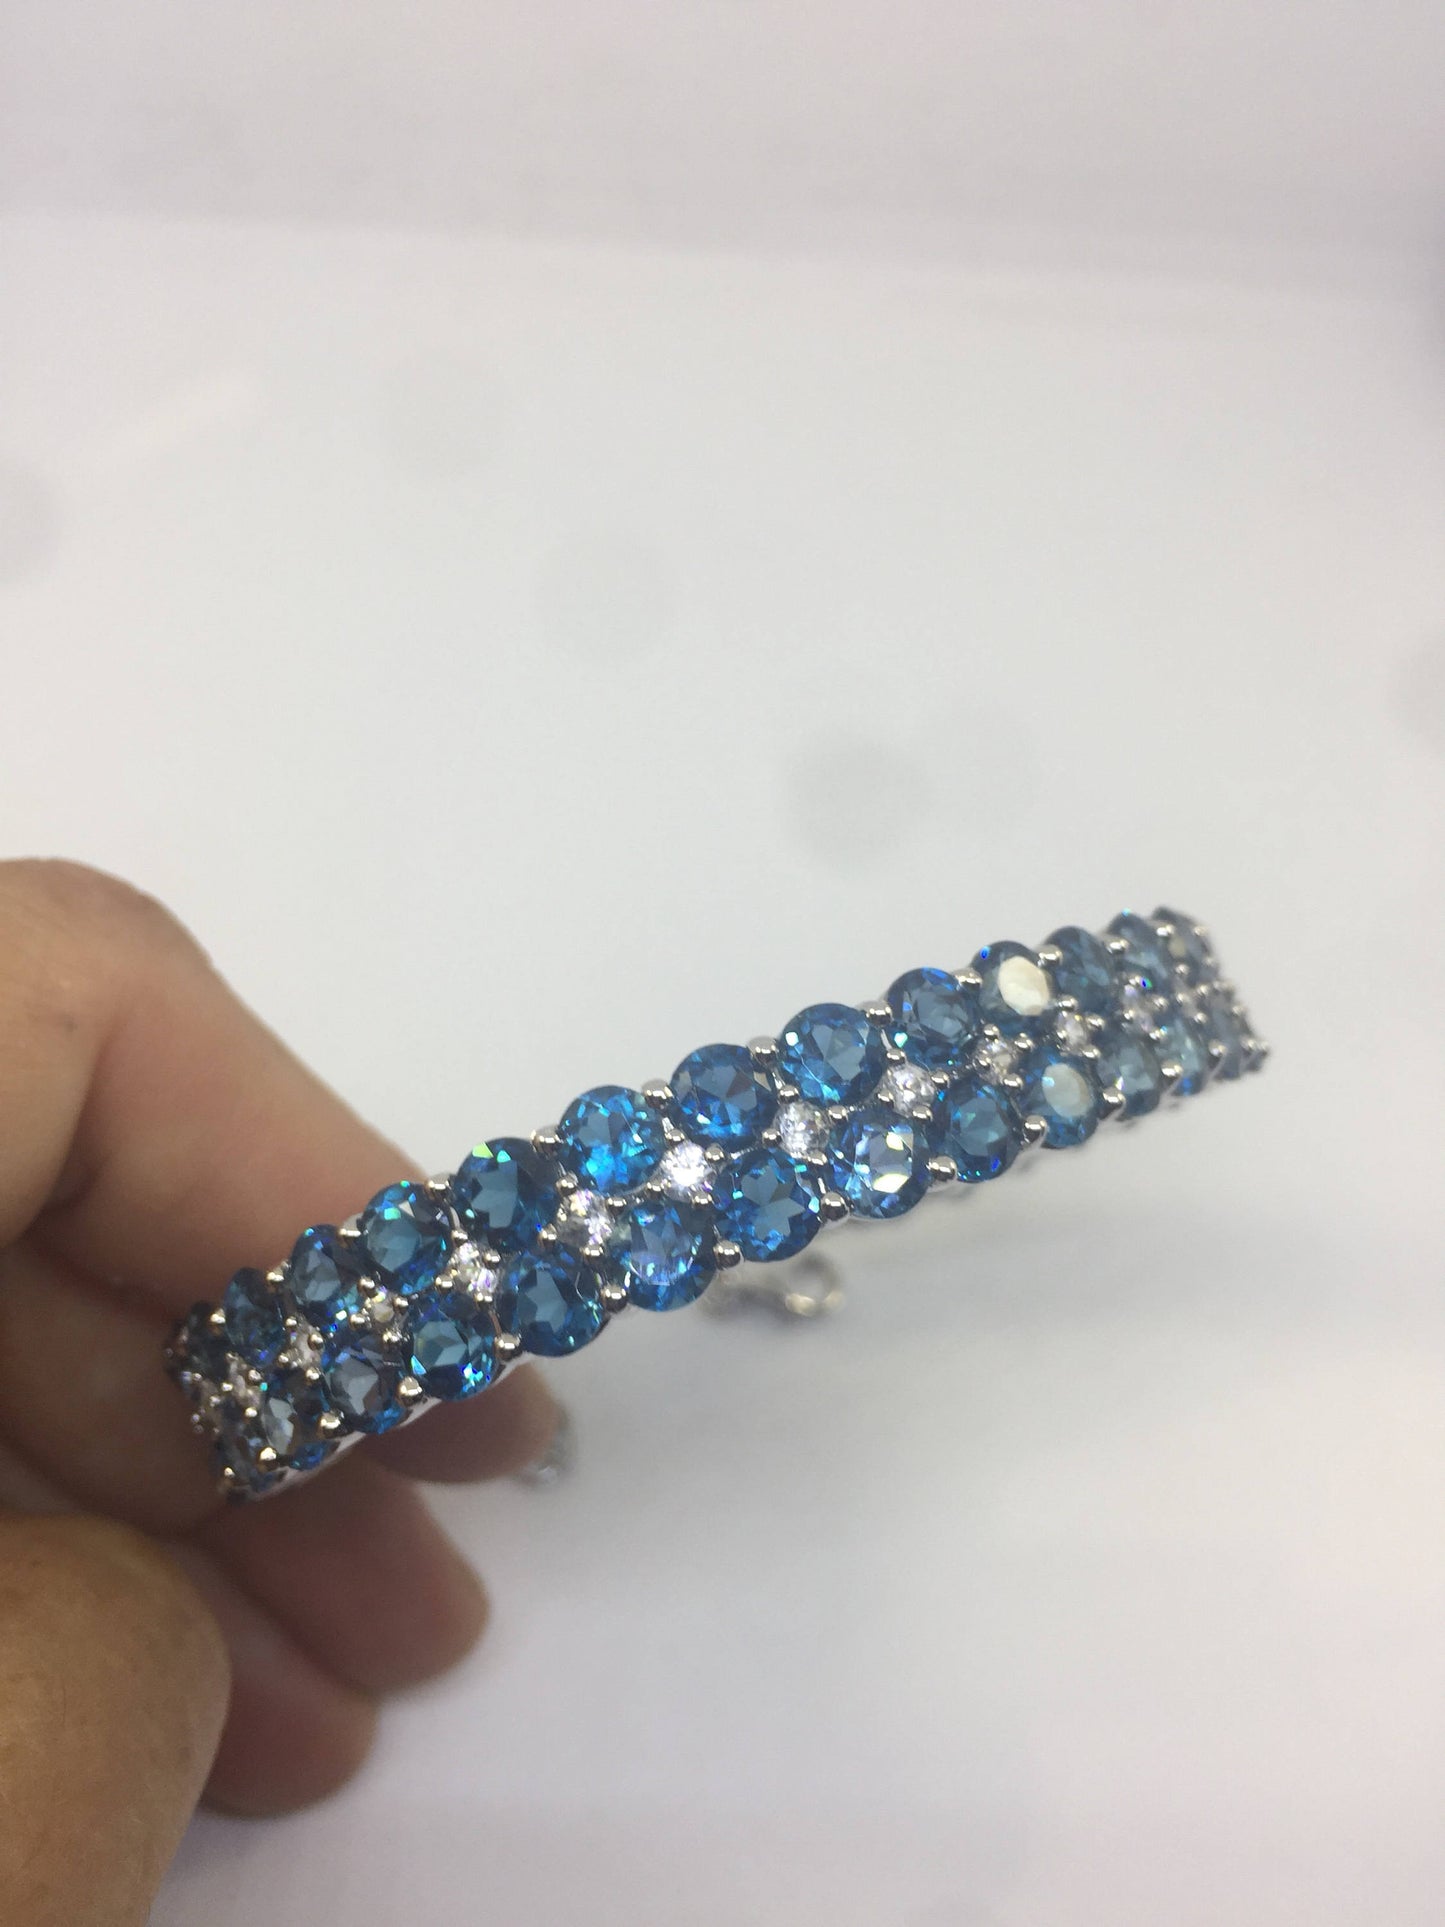 Handmade Genuine Blue Topaz 925 Sterling Silver Bangle Bracelet